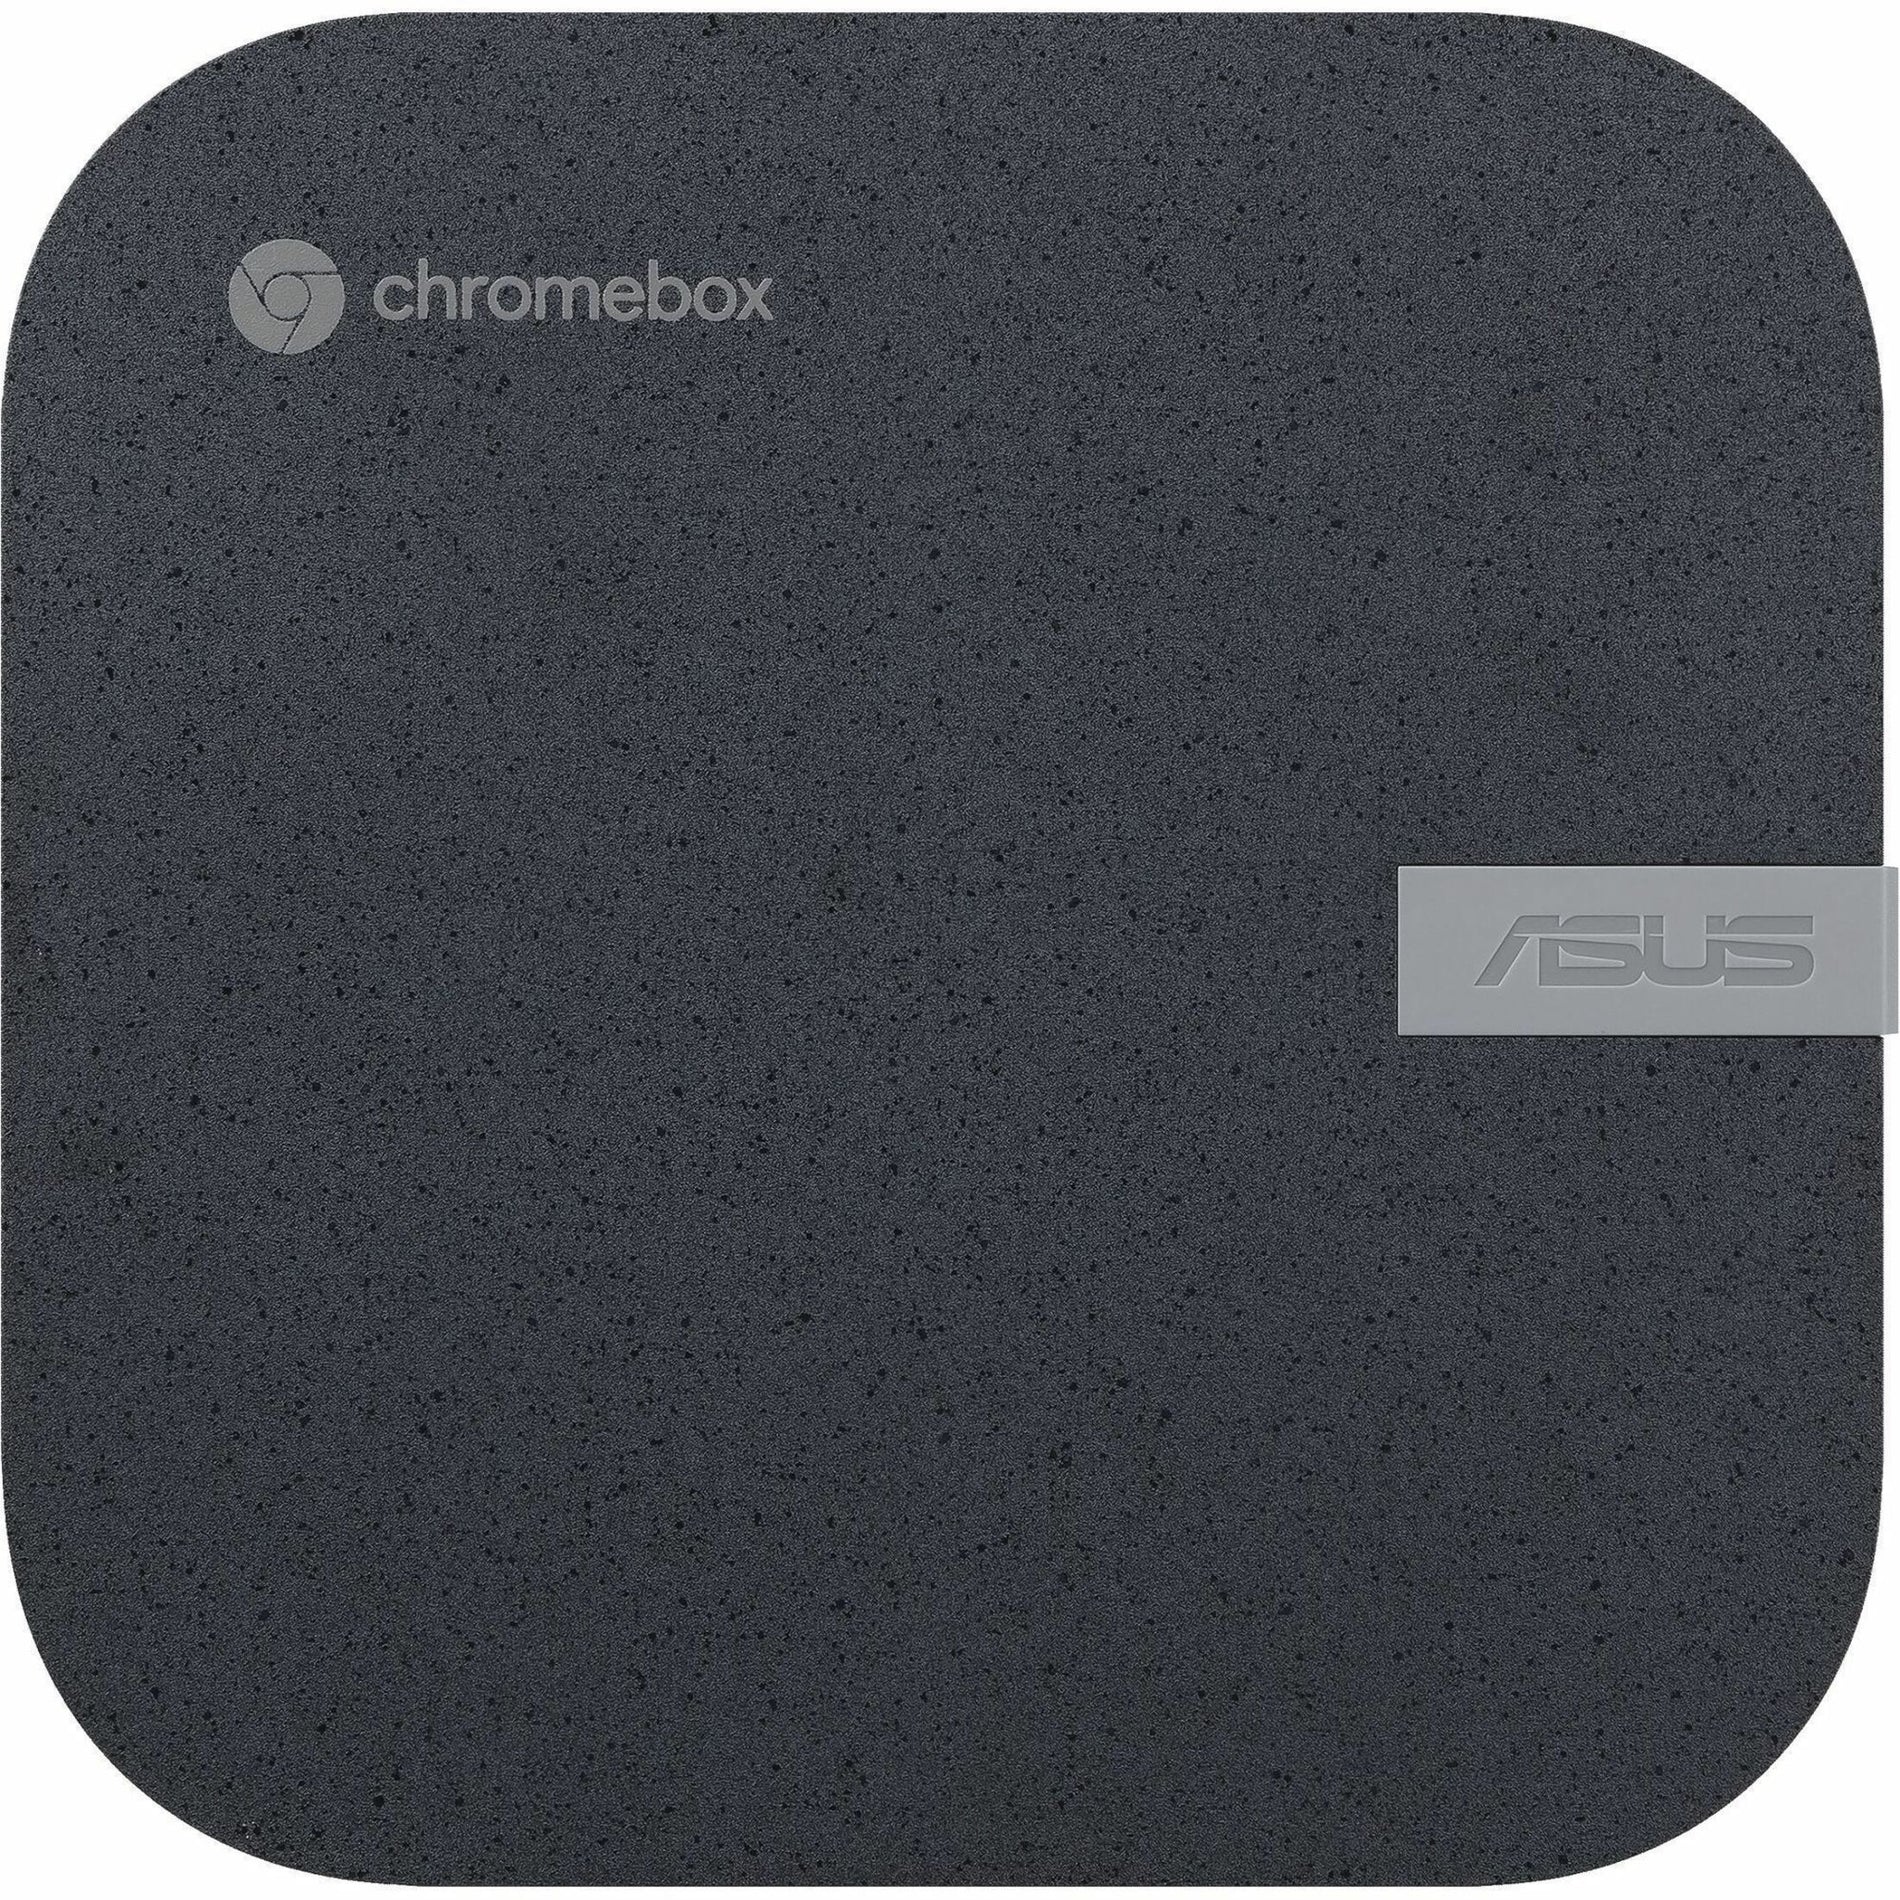 Asus CHROMEBOX5-S7057UNENT Chromebox - Intel Core i7 12th Gen i7-1260P 2.10 GHz, 16GB RAM, 256GB SSD, Mini PC, Eco Black